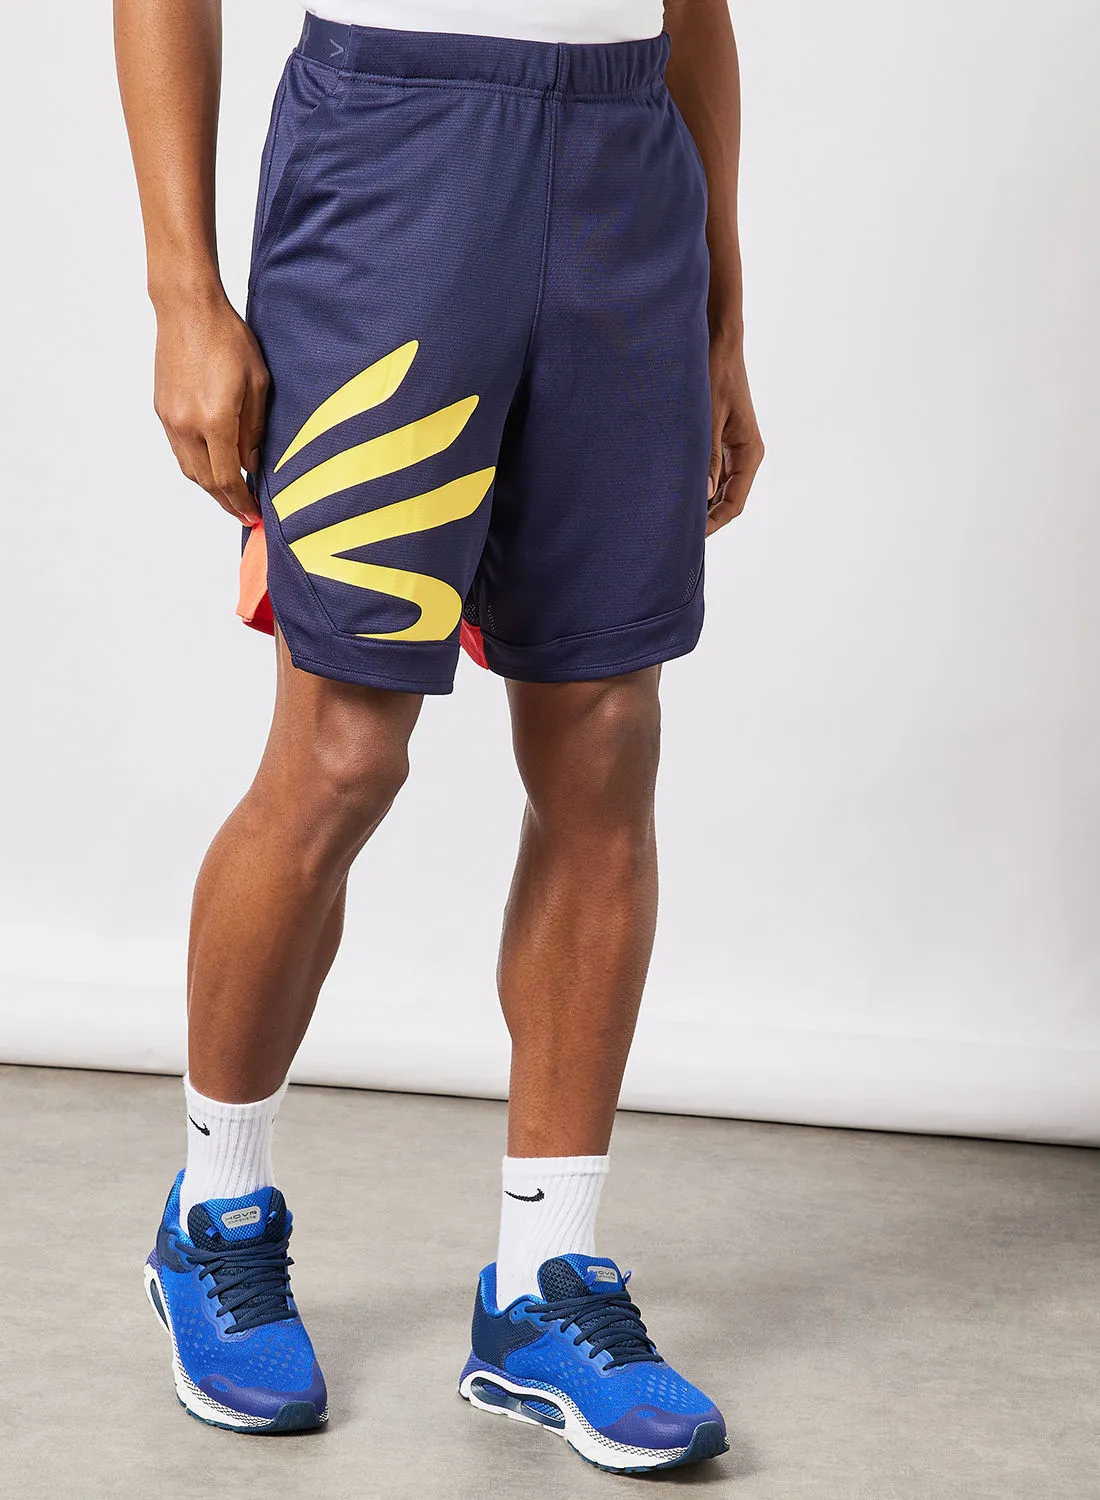 UNDER ARMOUR Curry Splash Basketball Shorts